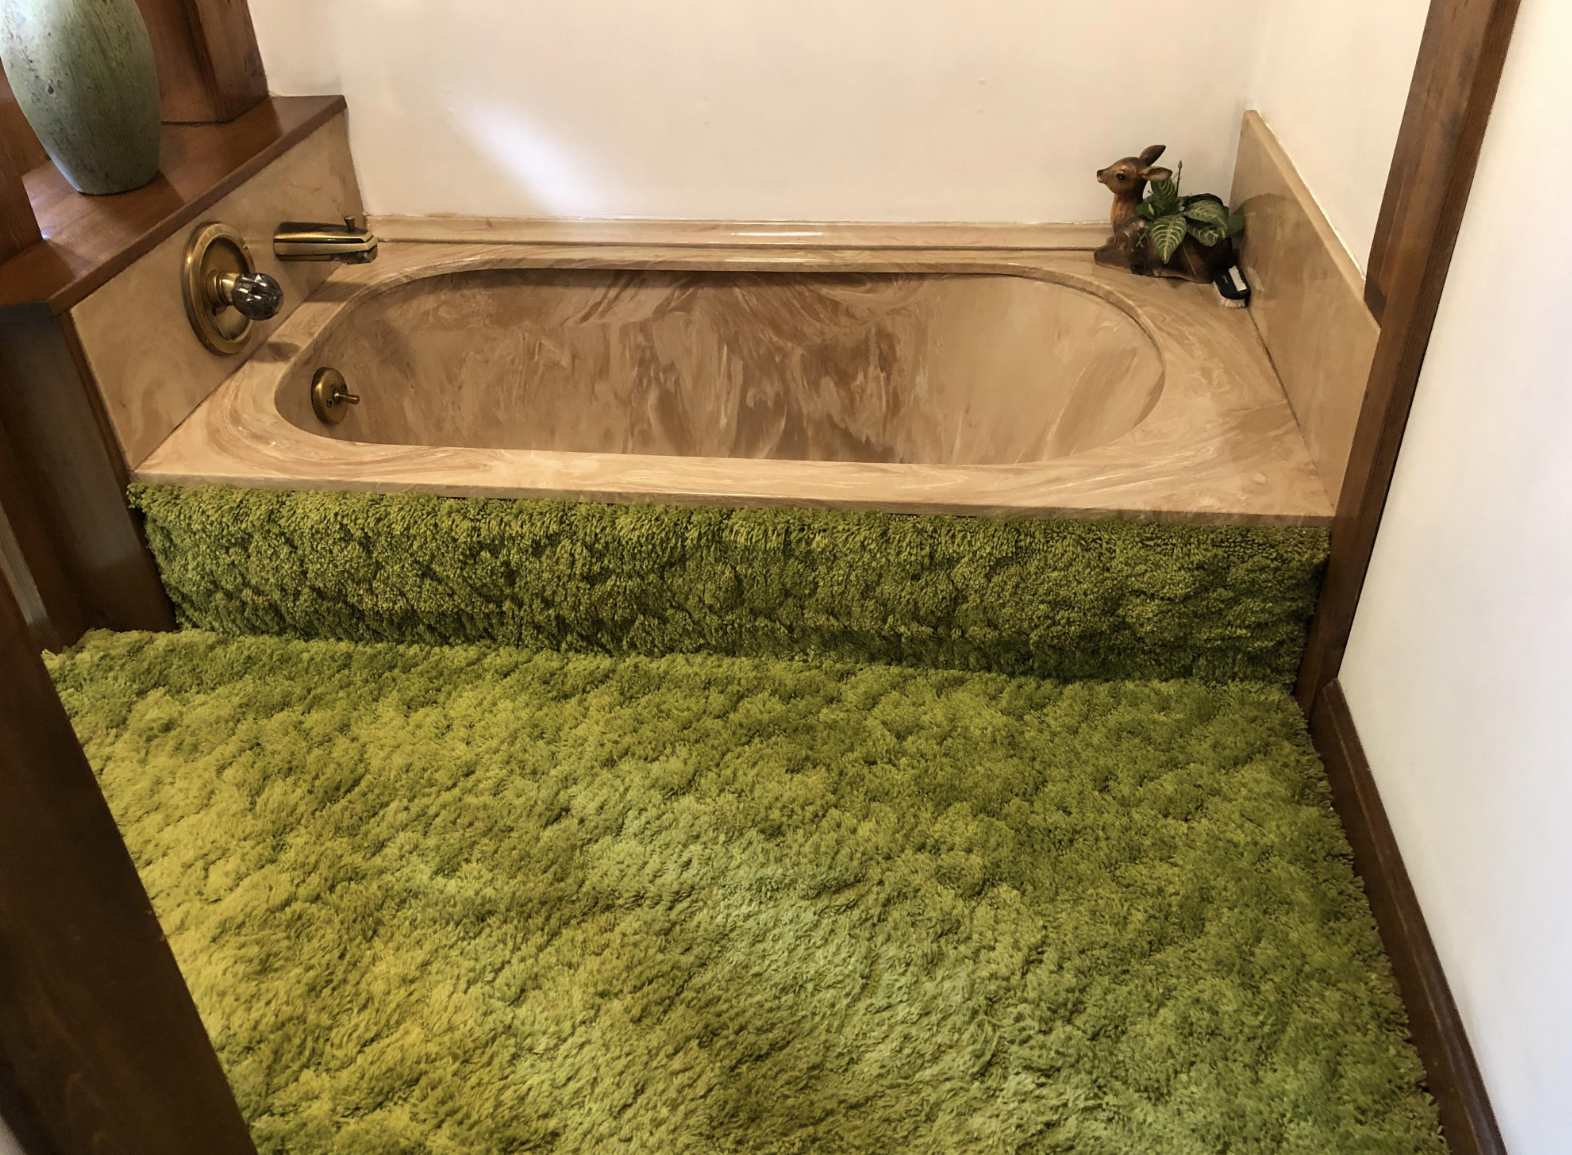 Green carpet in a bathroom